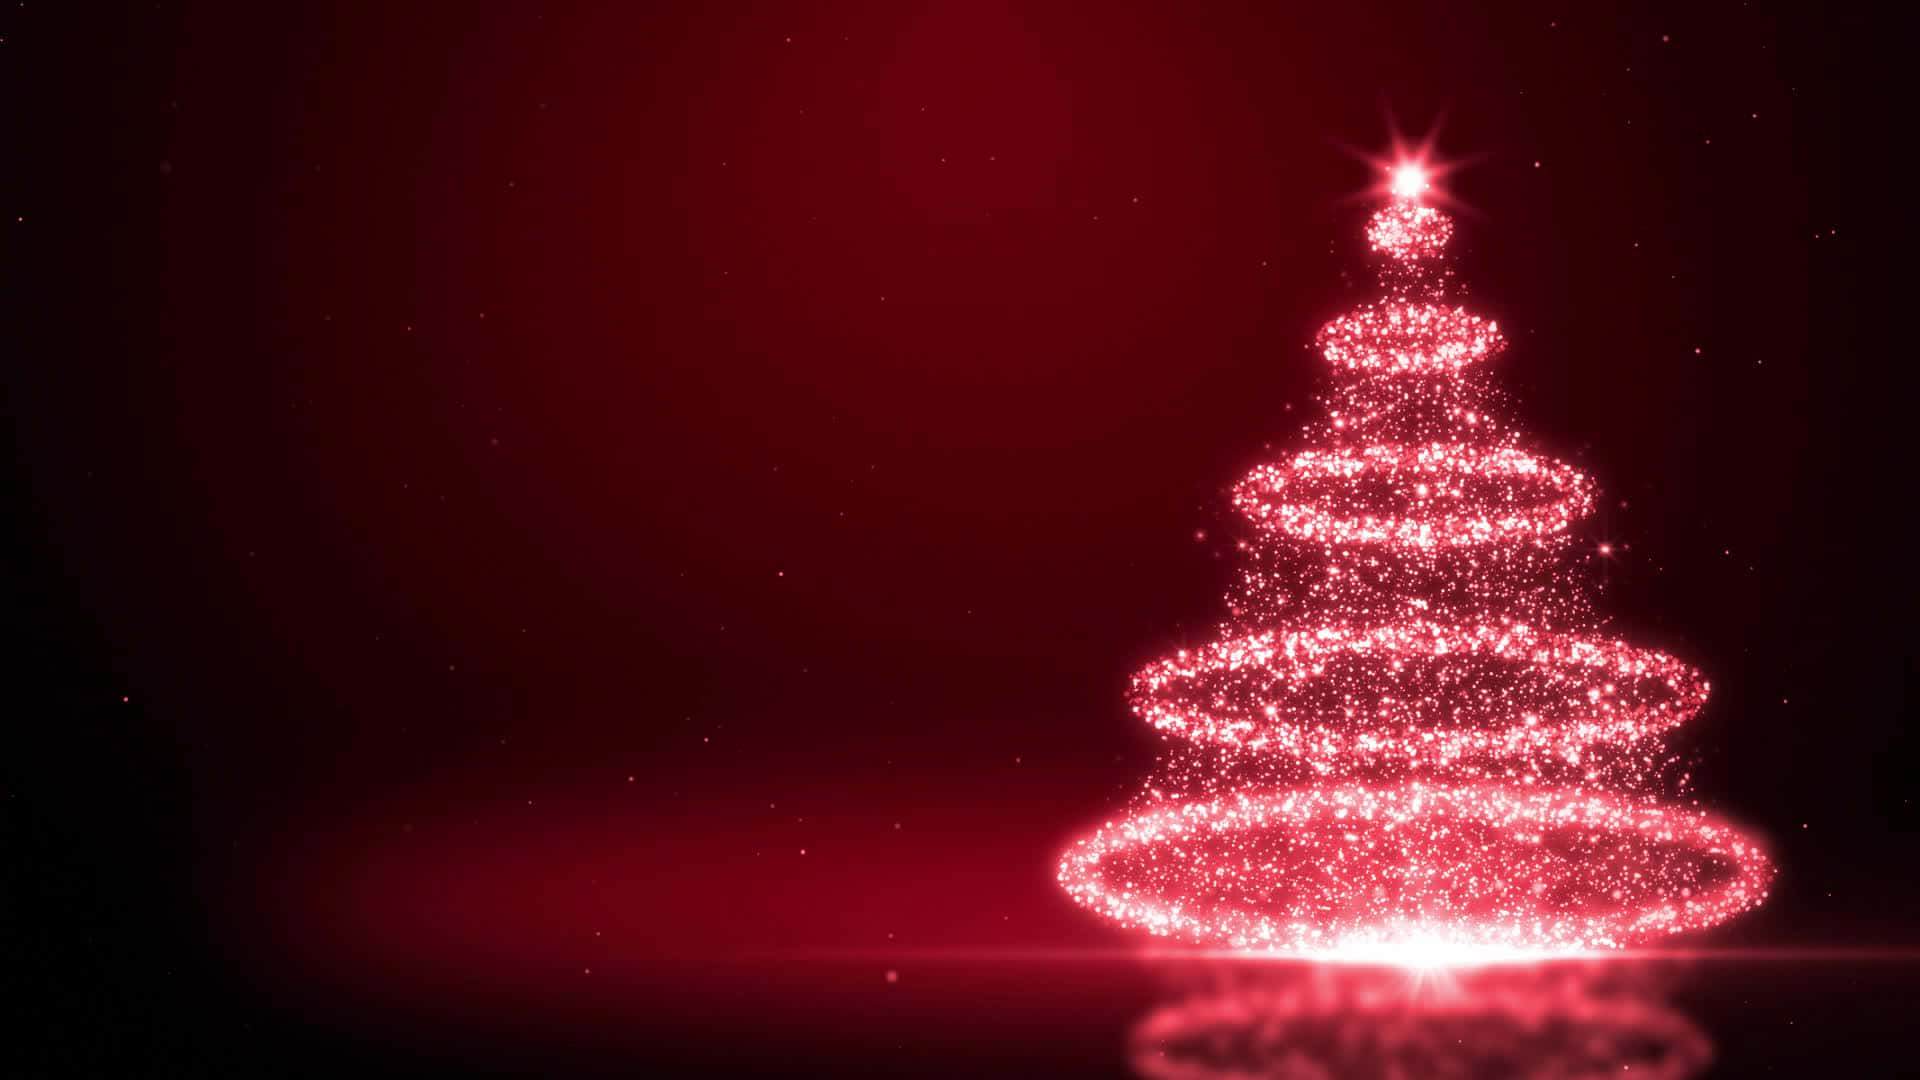 Colorful Christmas Tree lights up the night